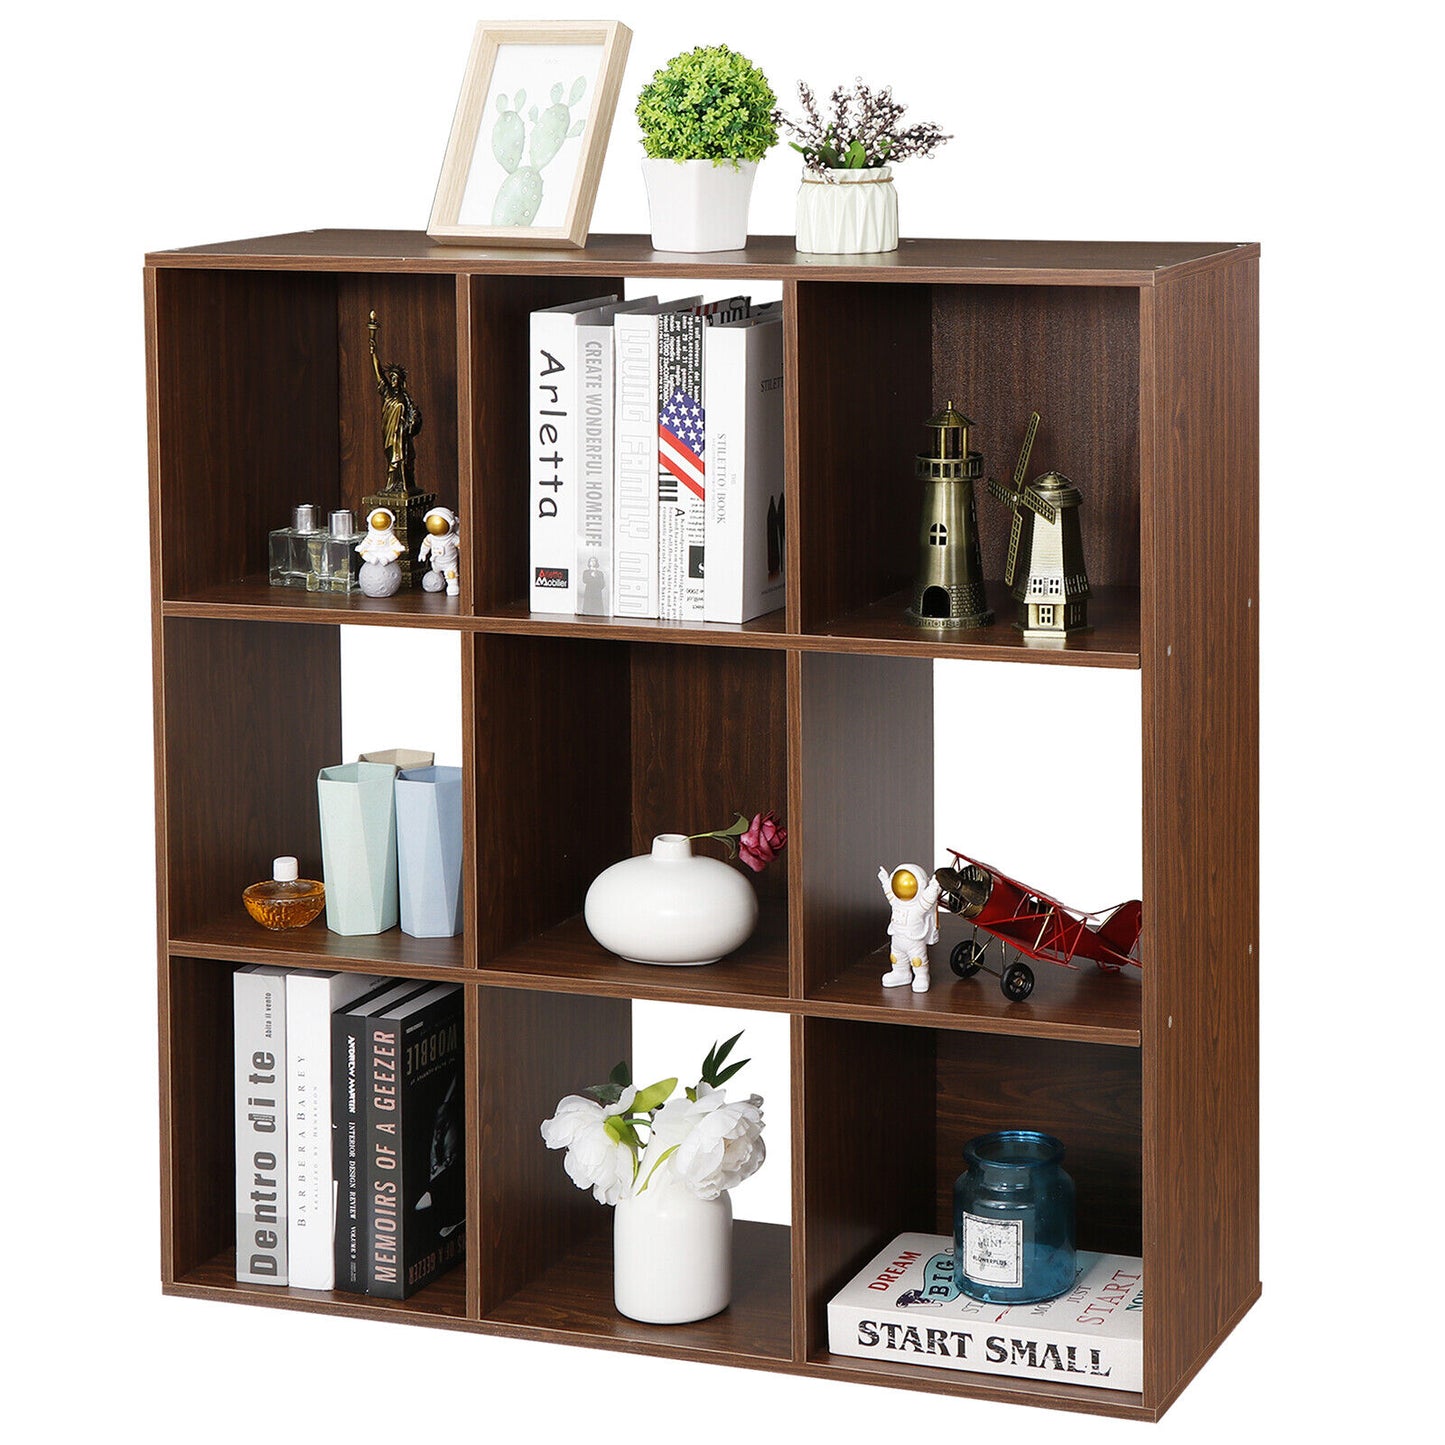 9 Cube Storage Shelf Organizer Wood Bookshelf Display with 5 Back Panels Brown